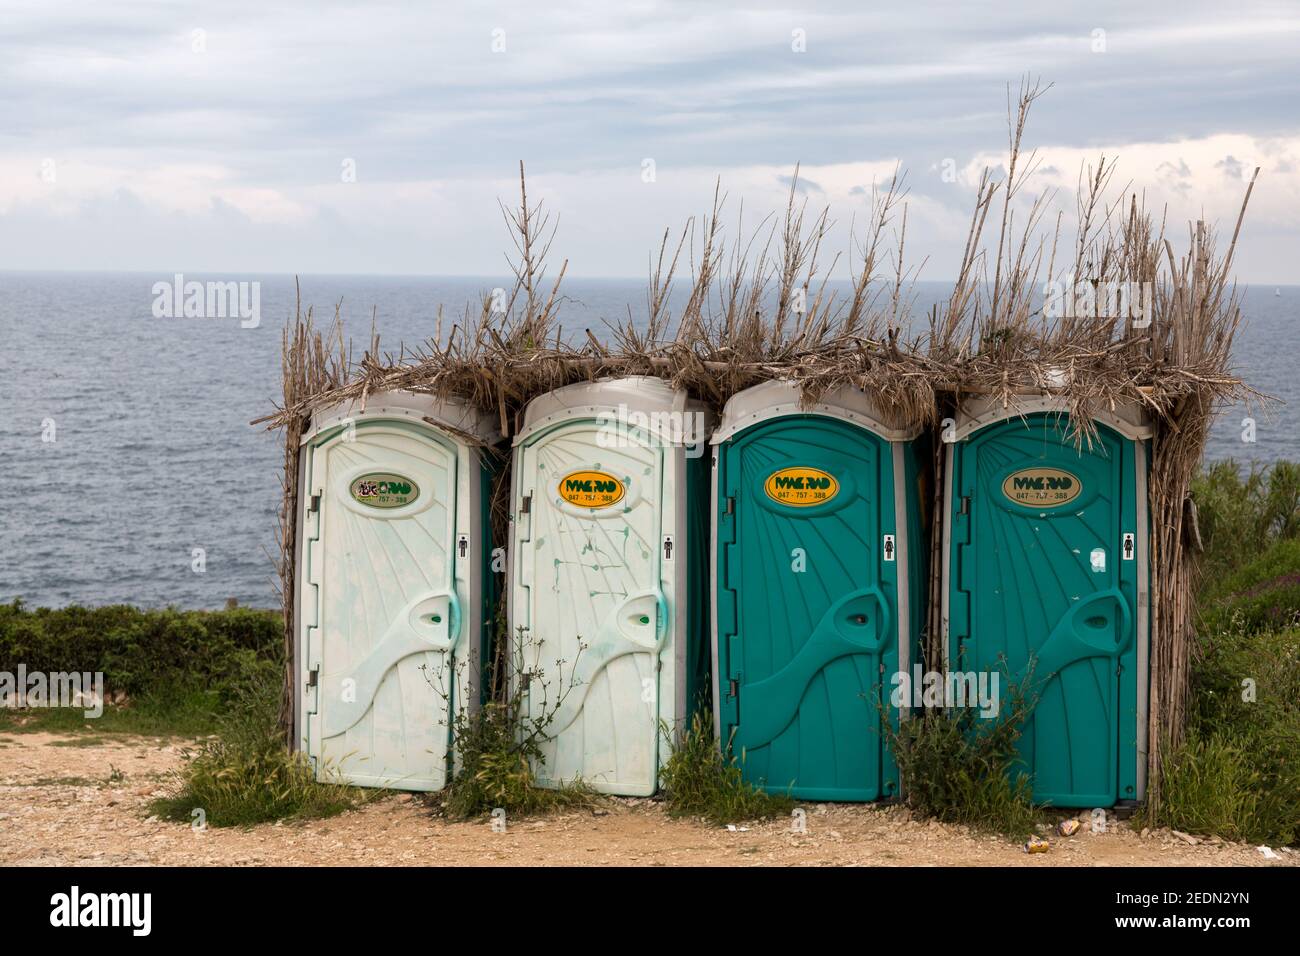 19.05.2016, Prementura, Istria, Croatia - Mobile toilets in the nature reserve Cape Kamenjak, at the southern tip of Istria.. 00A160519D081CAROEX.JPG Stock Photo